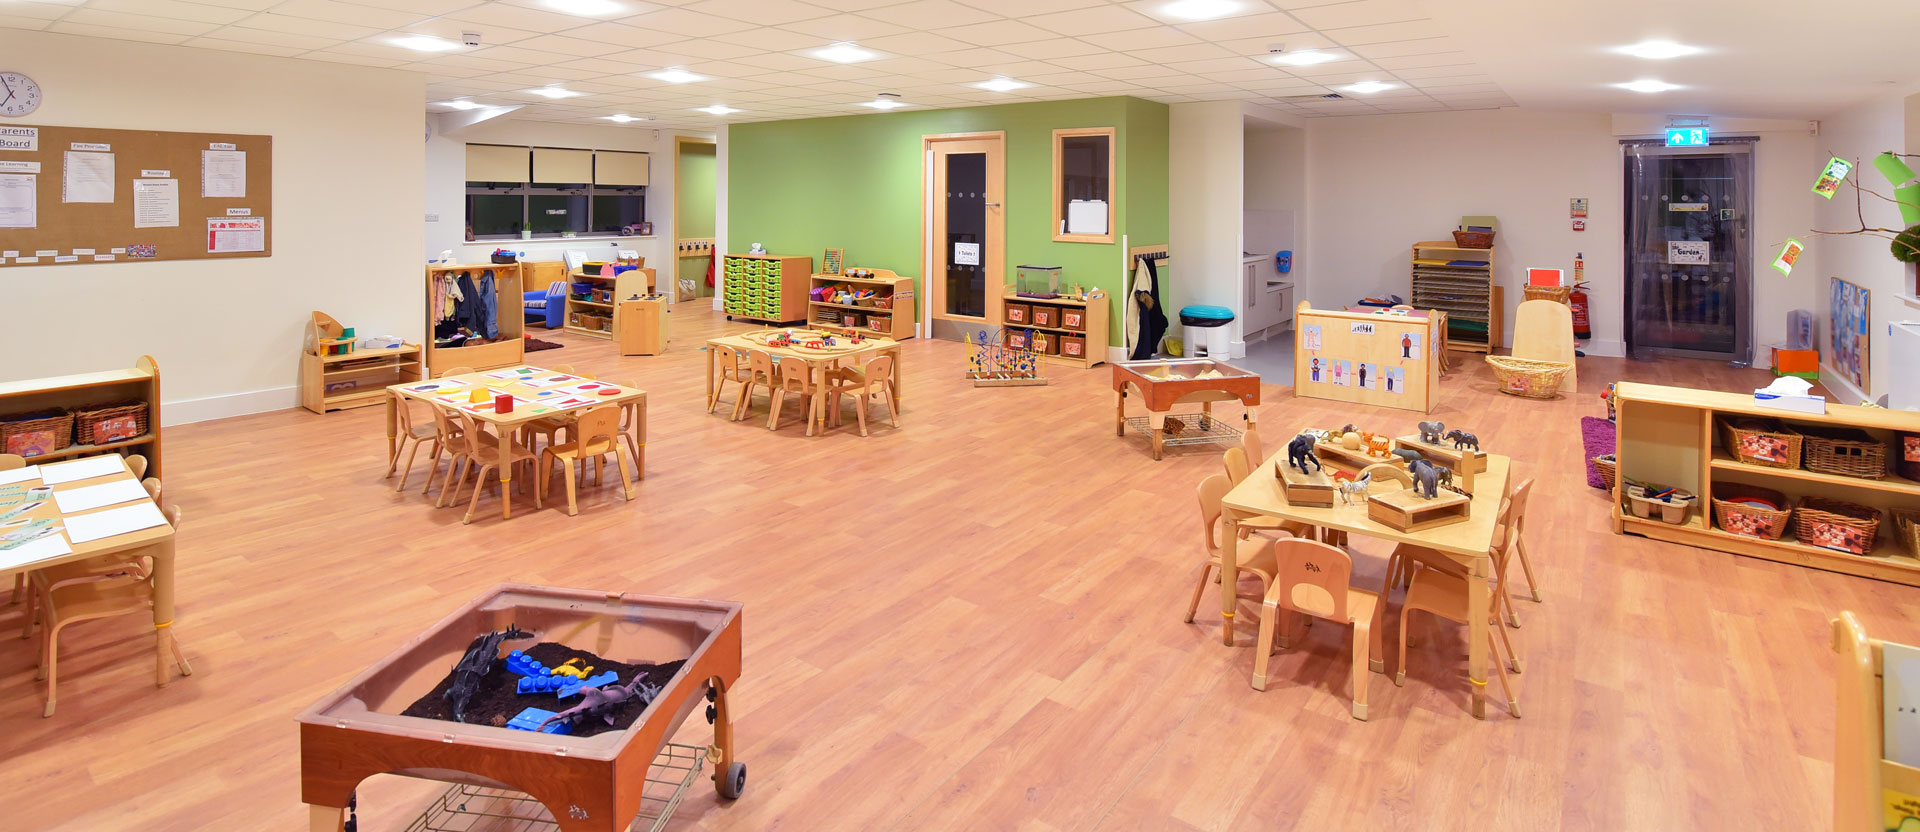 New Eltham Day Nursery and Preschool